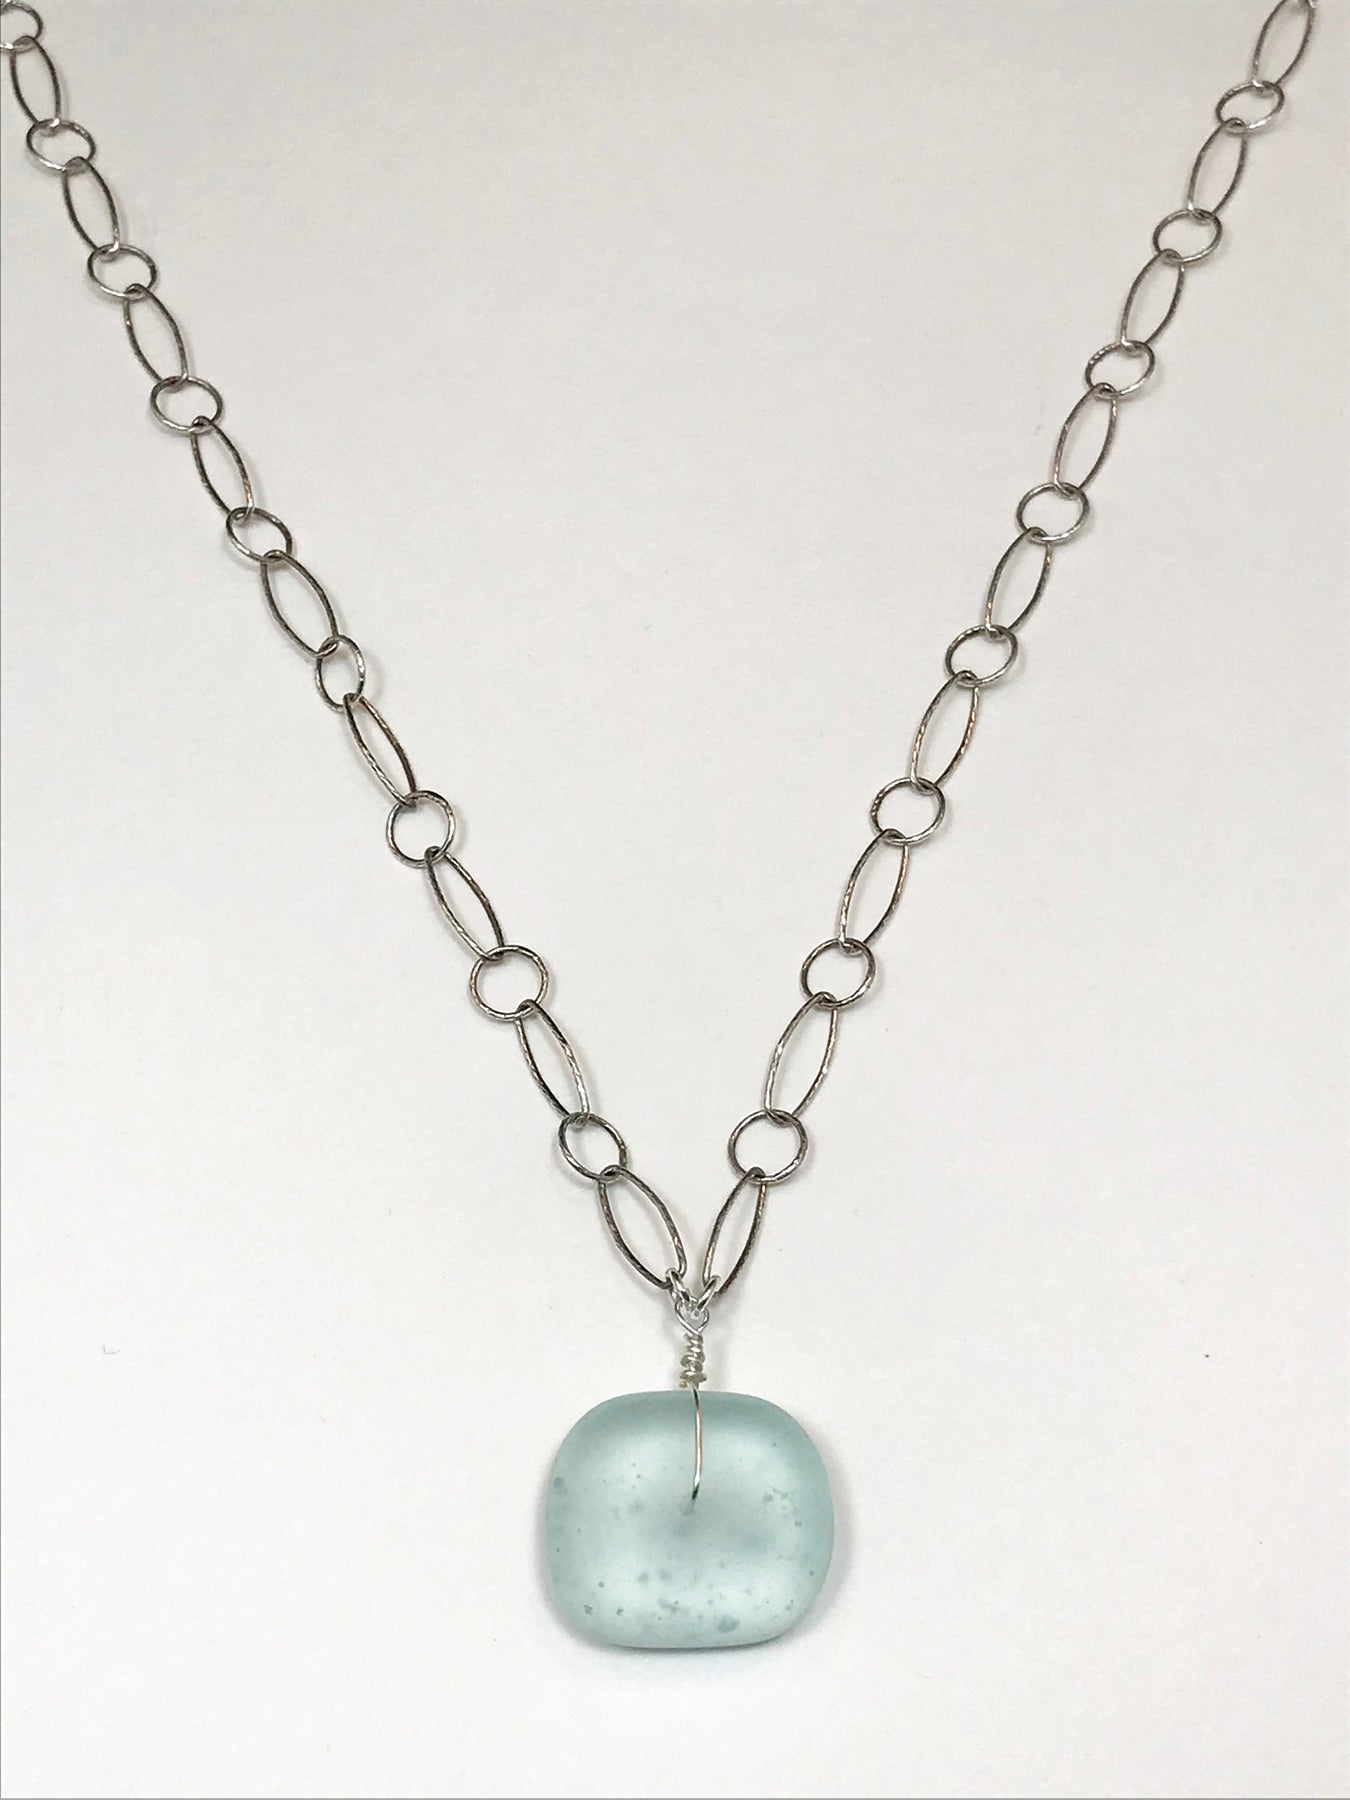 Aqua Beach Glass Necklace silver chain